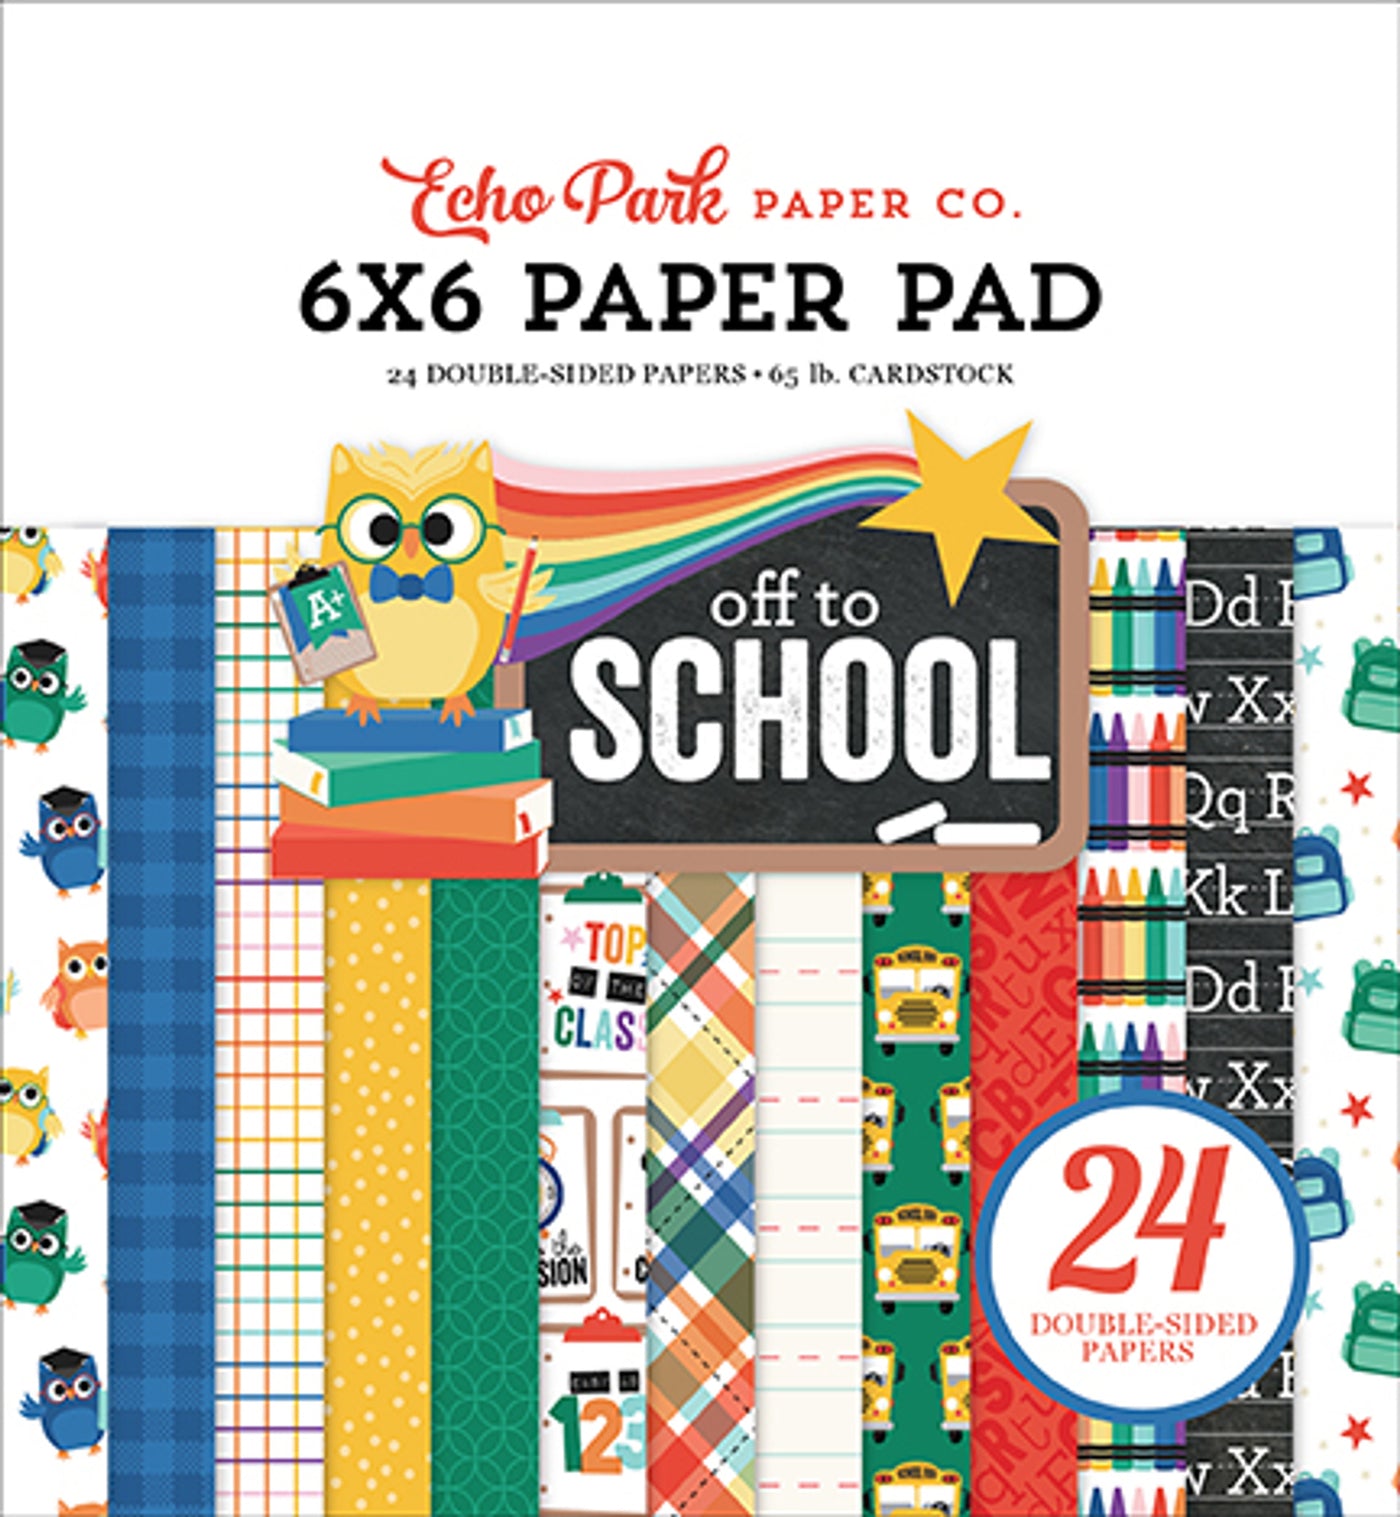 OFF TO SCHOOL 6x6 Paper Pad - Echo Park